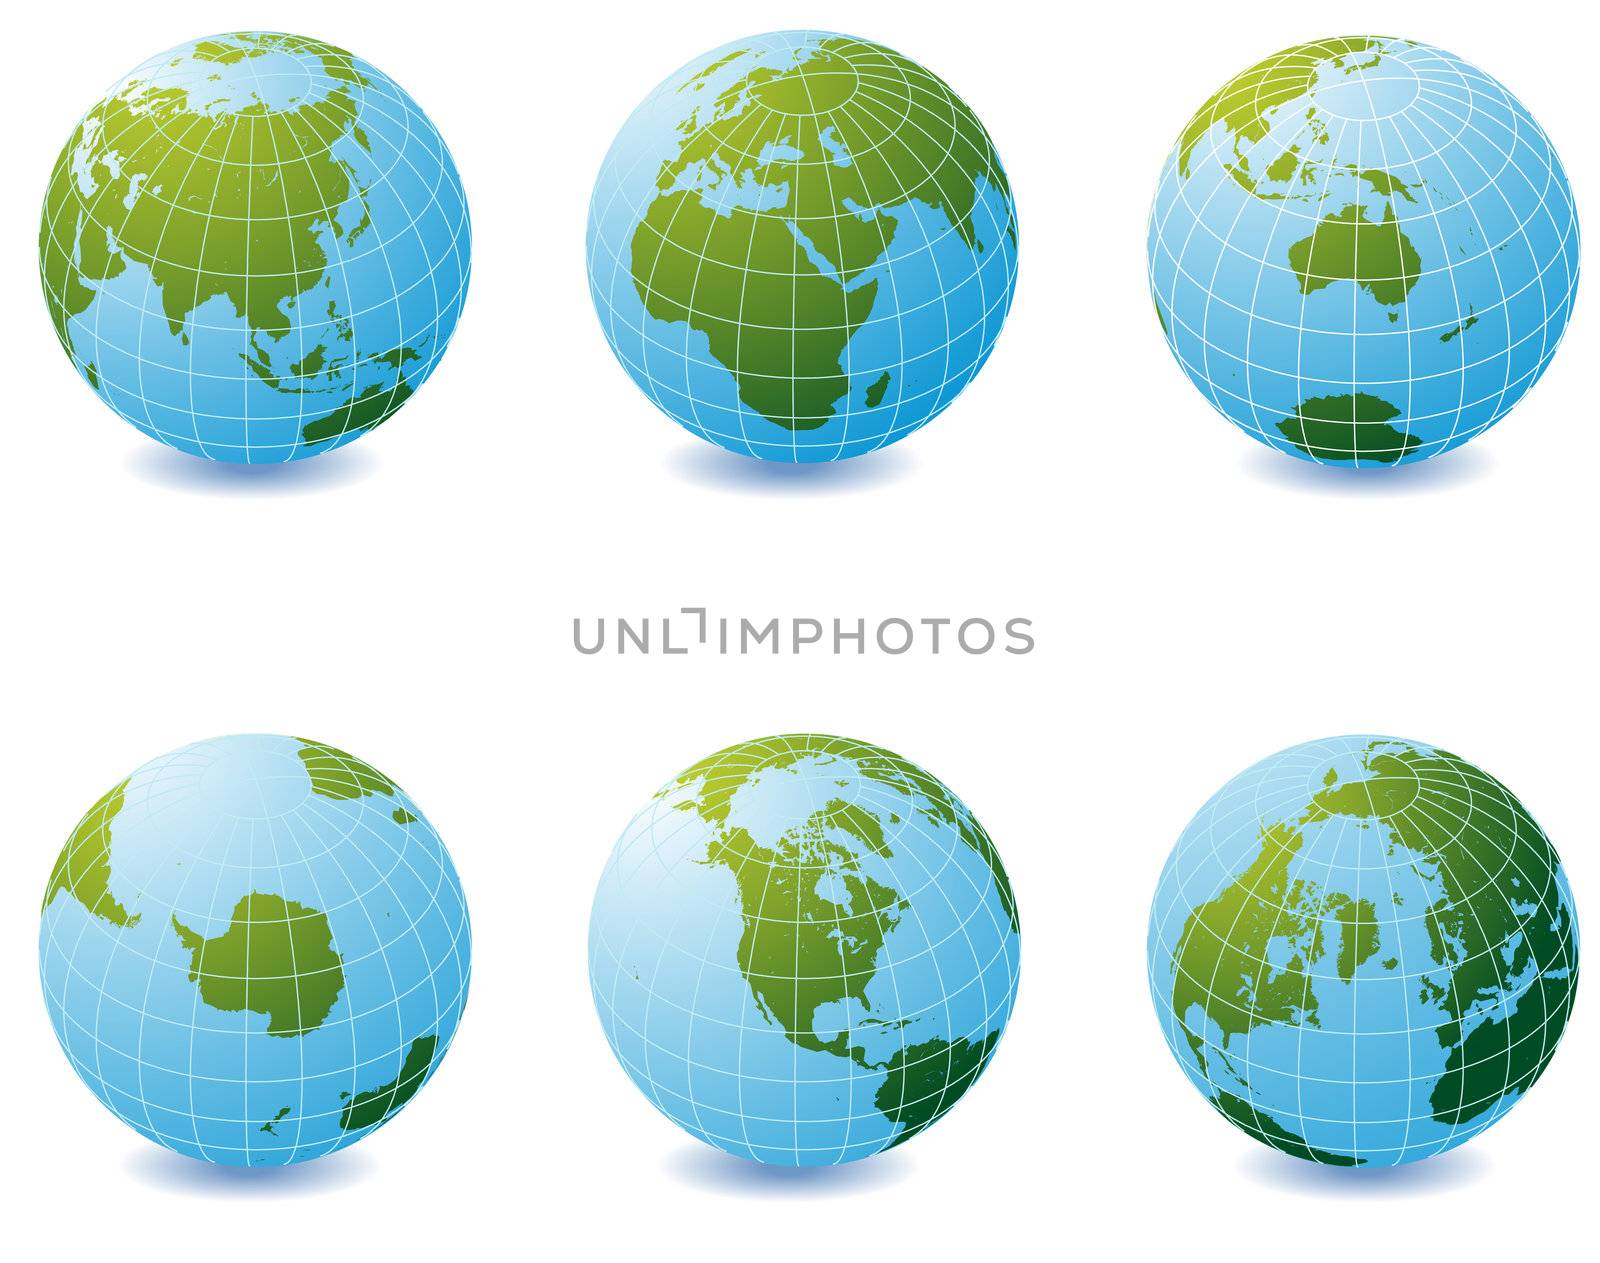 Earth globe icons by Lirch